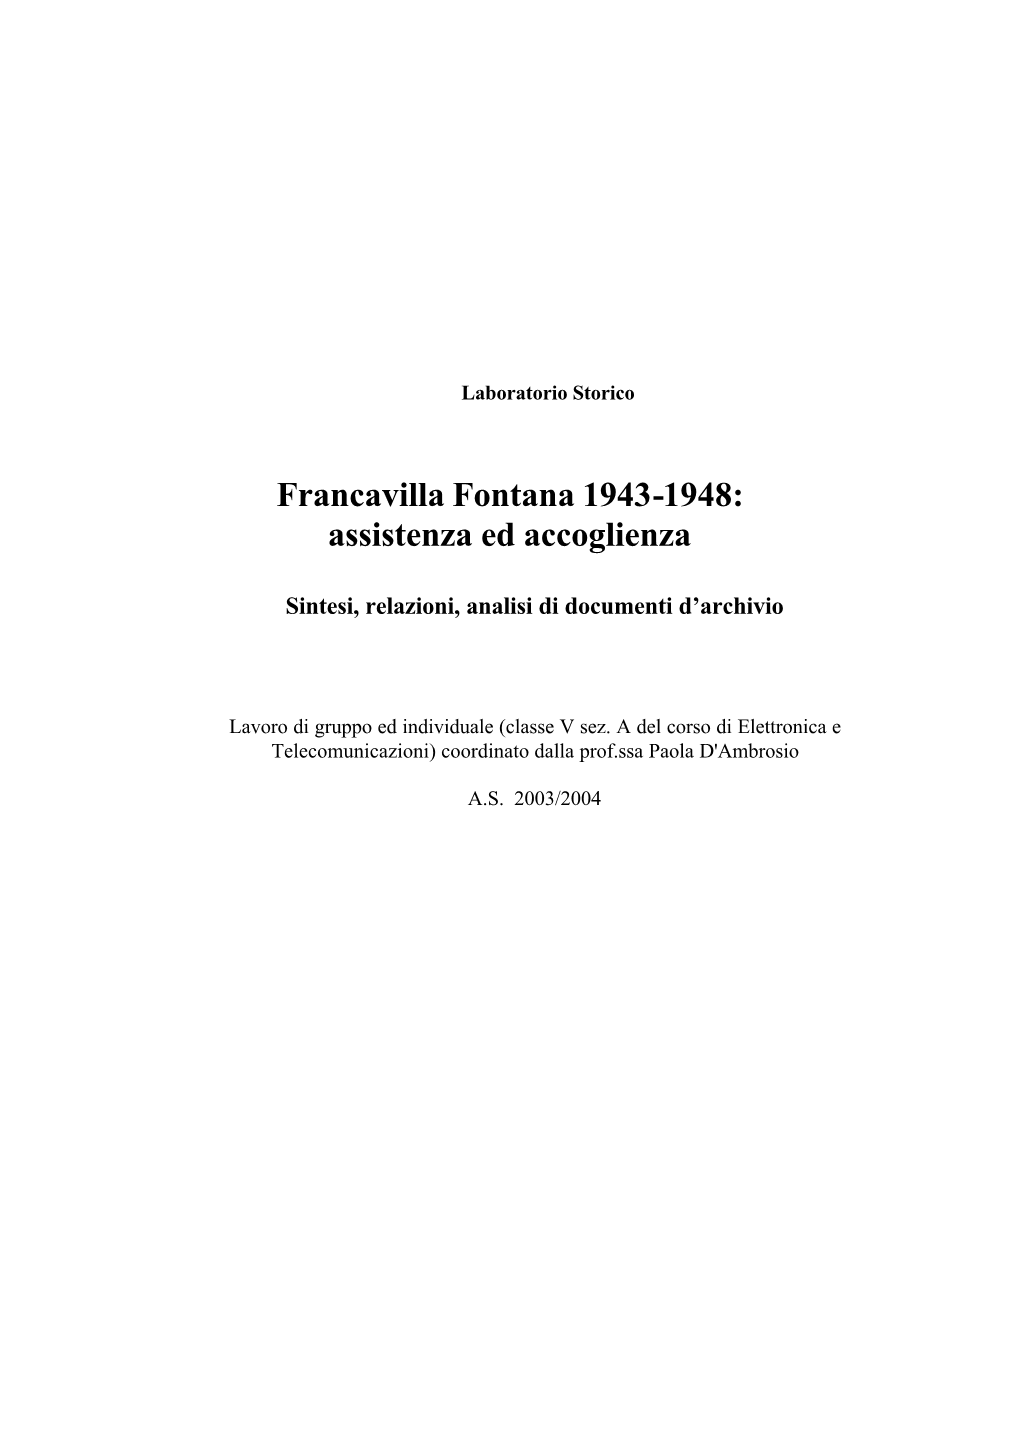 Francavilla Fontana 1943-48 : Assistenza Ed Accoglienza .- ITIS “E